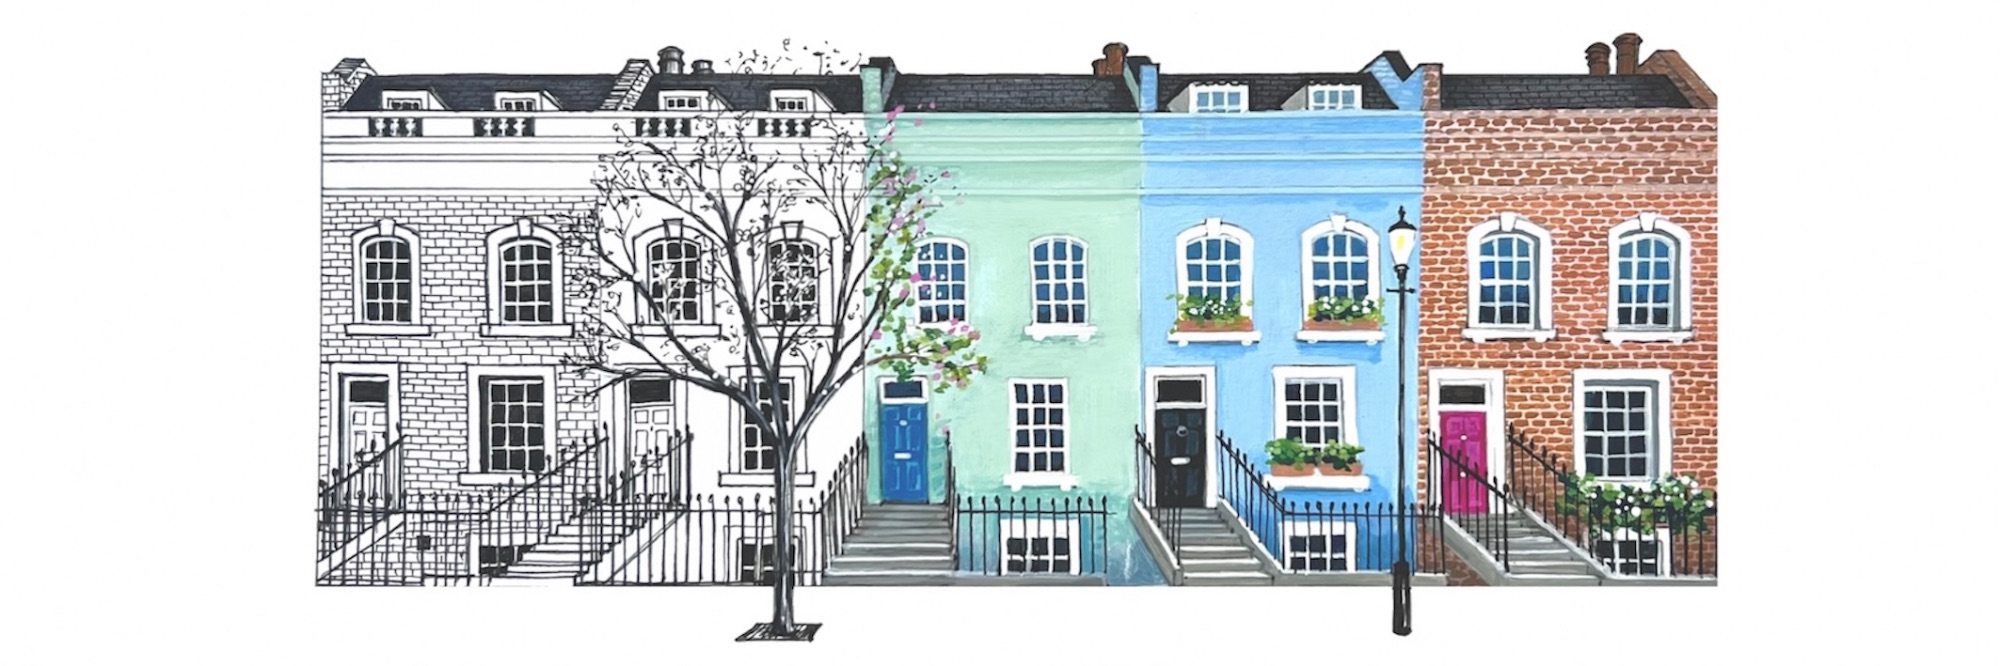 House illustrator website banner copy